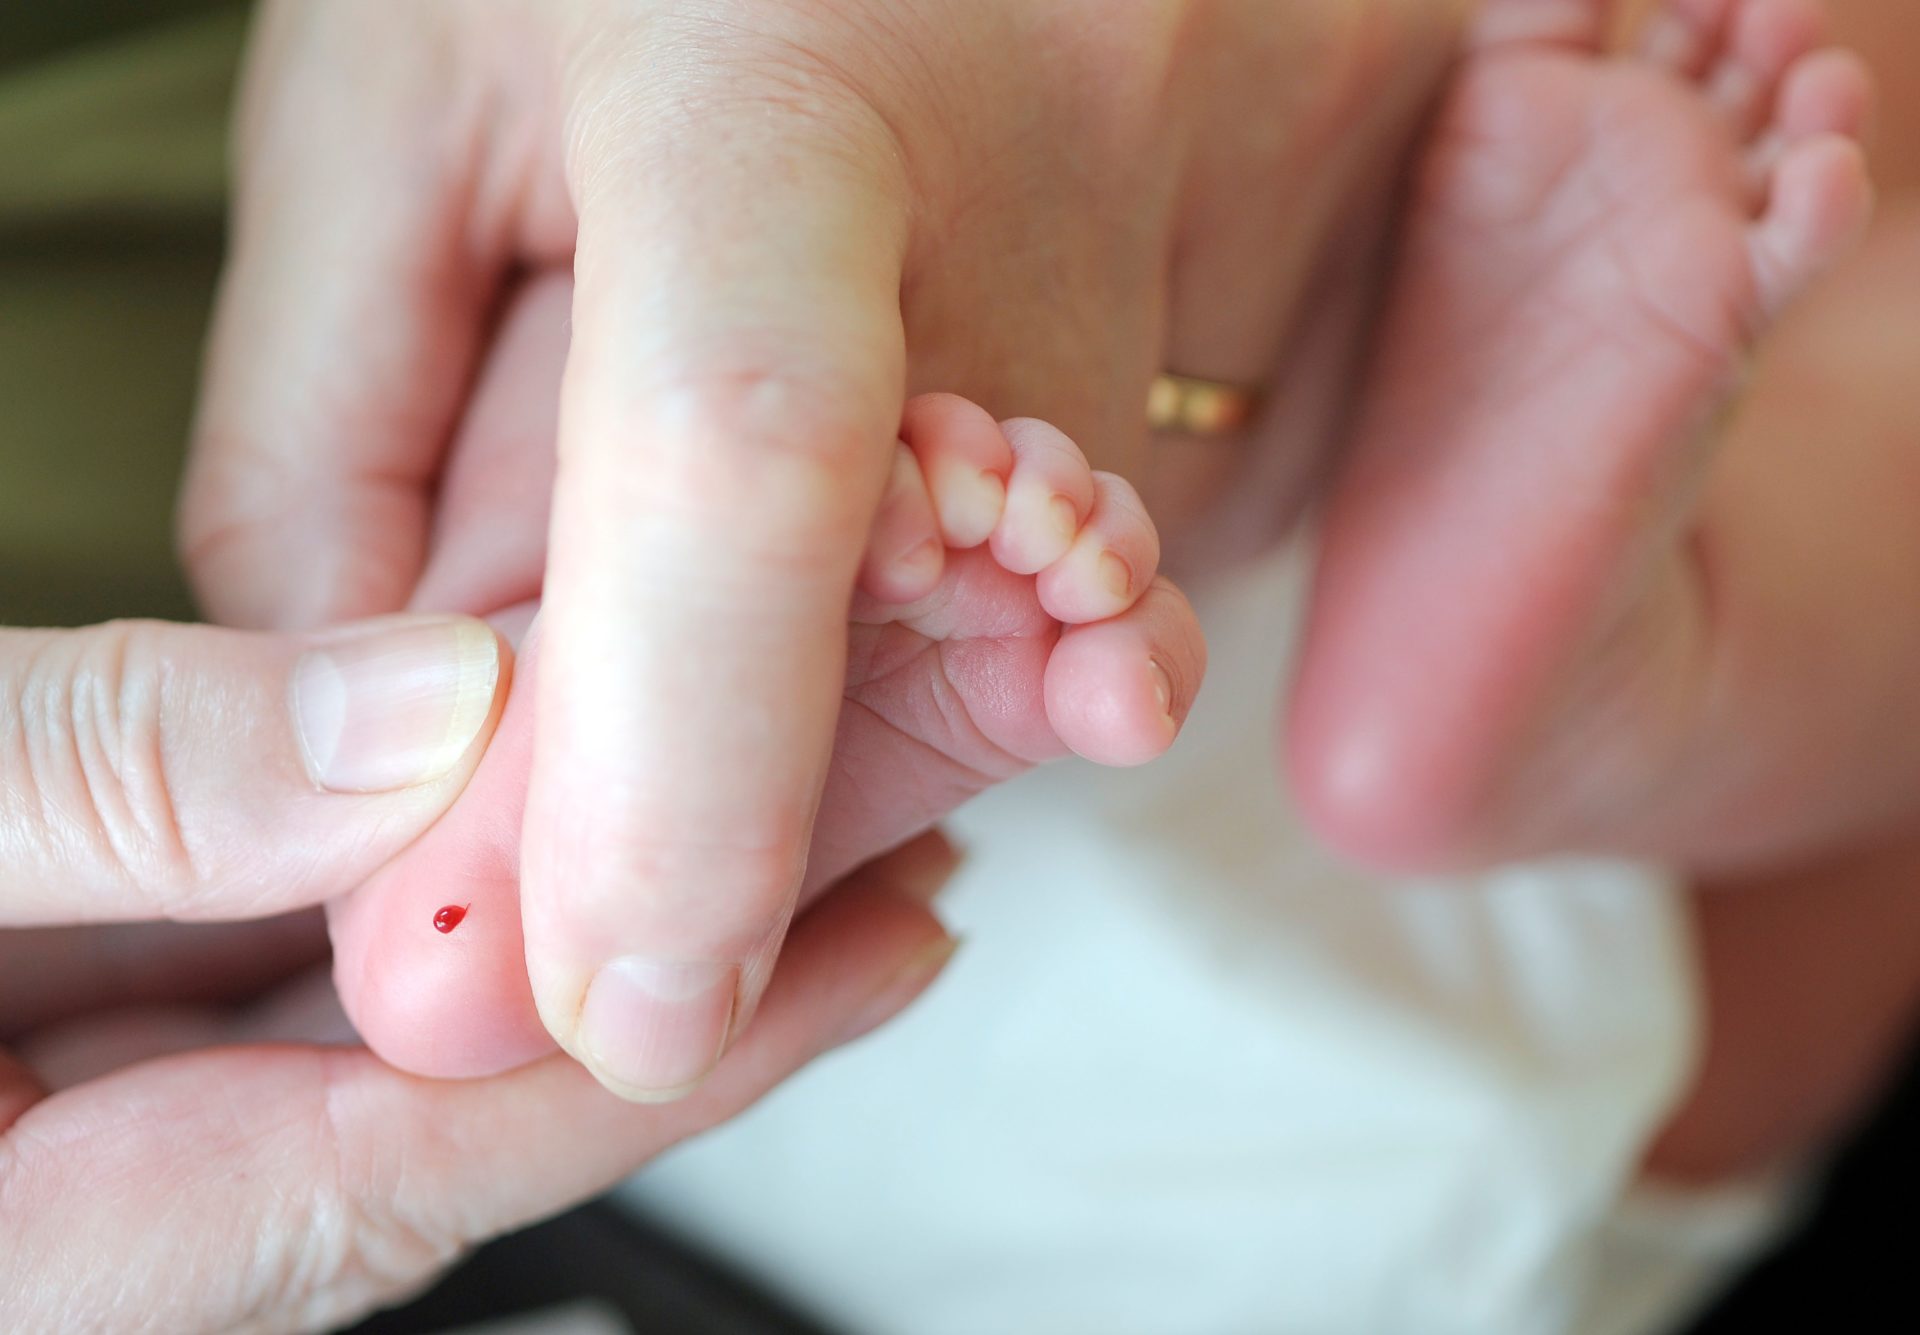 A heel prick test on a newborn baby